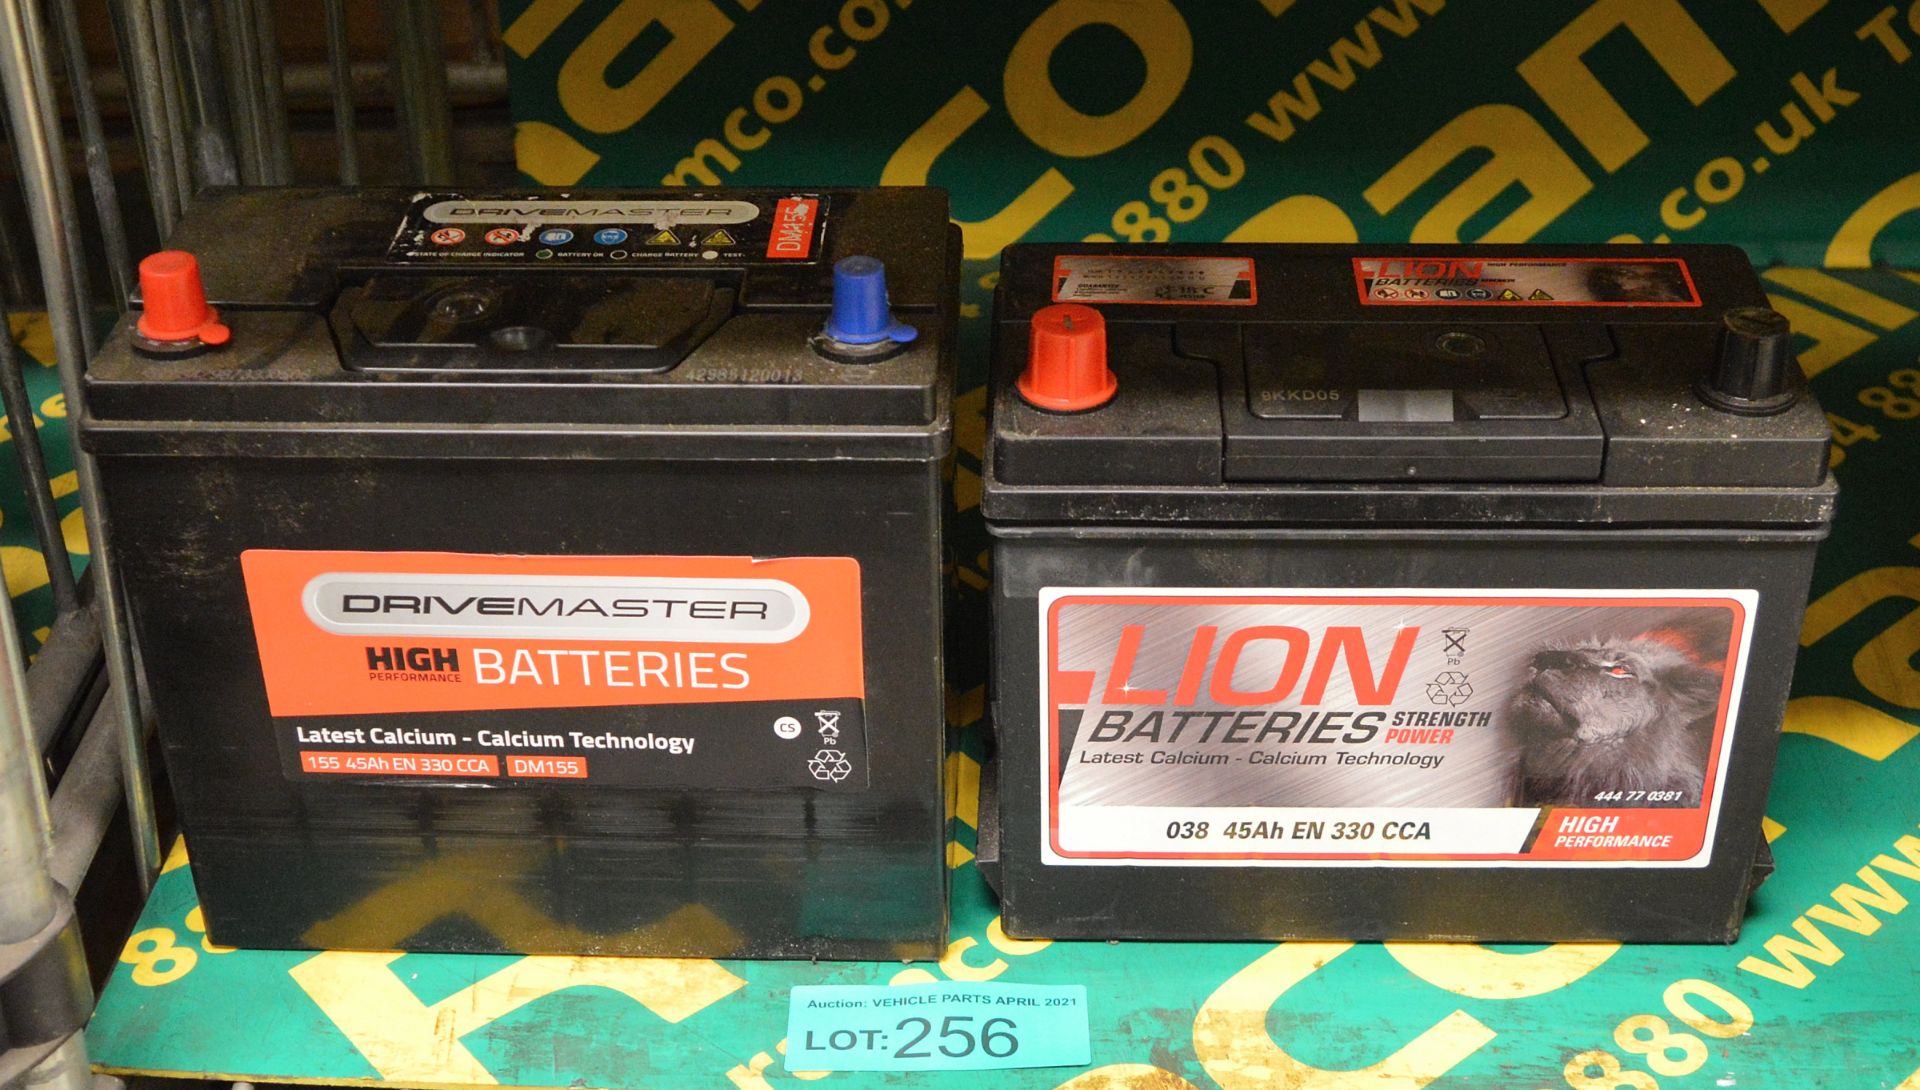 Drivemaster DM155 & Lion 038 45Ah EN 330 CCA Batteries